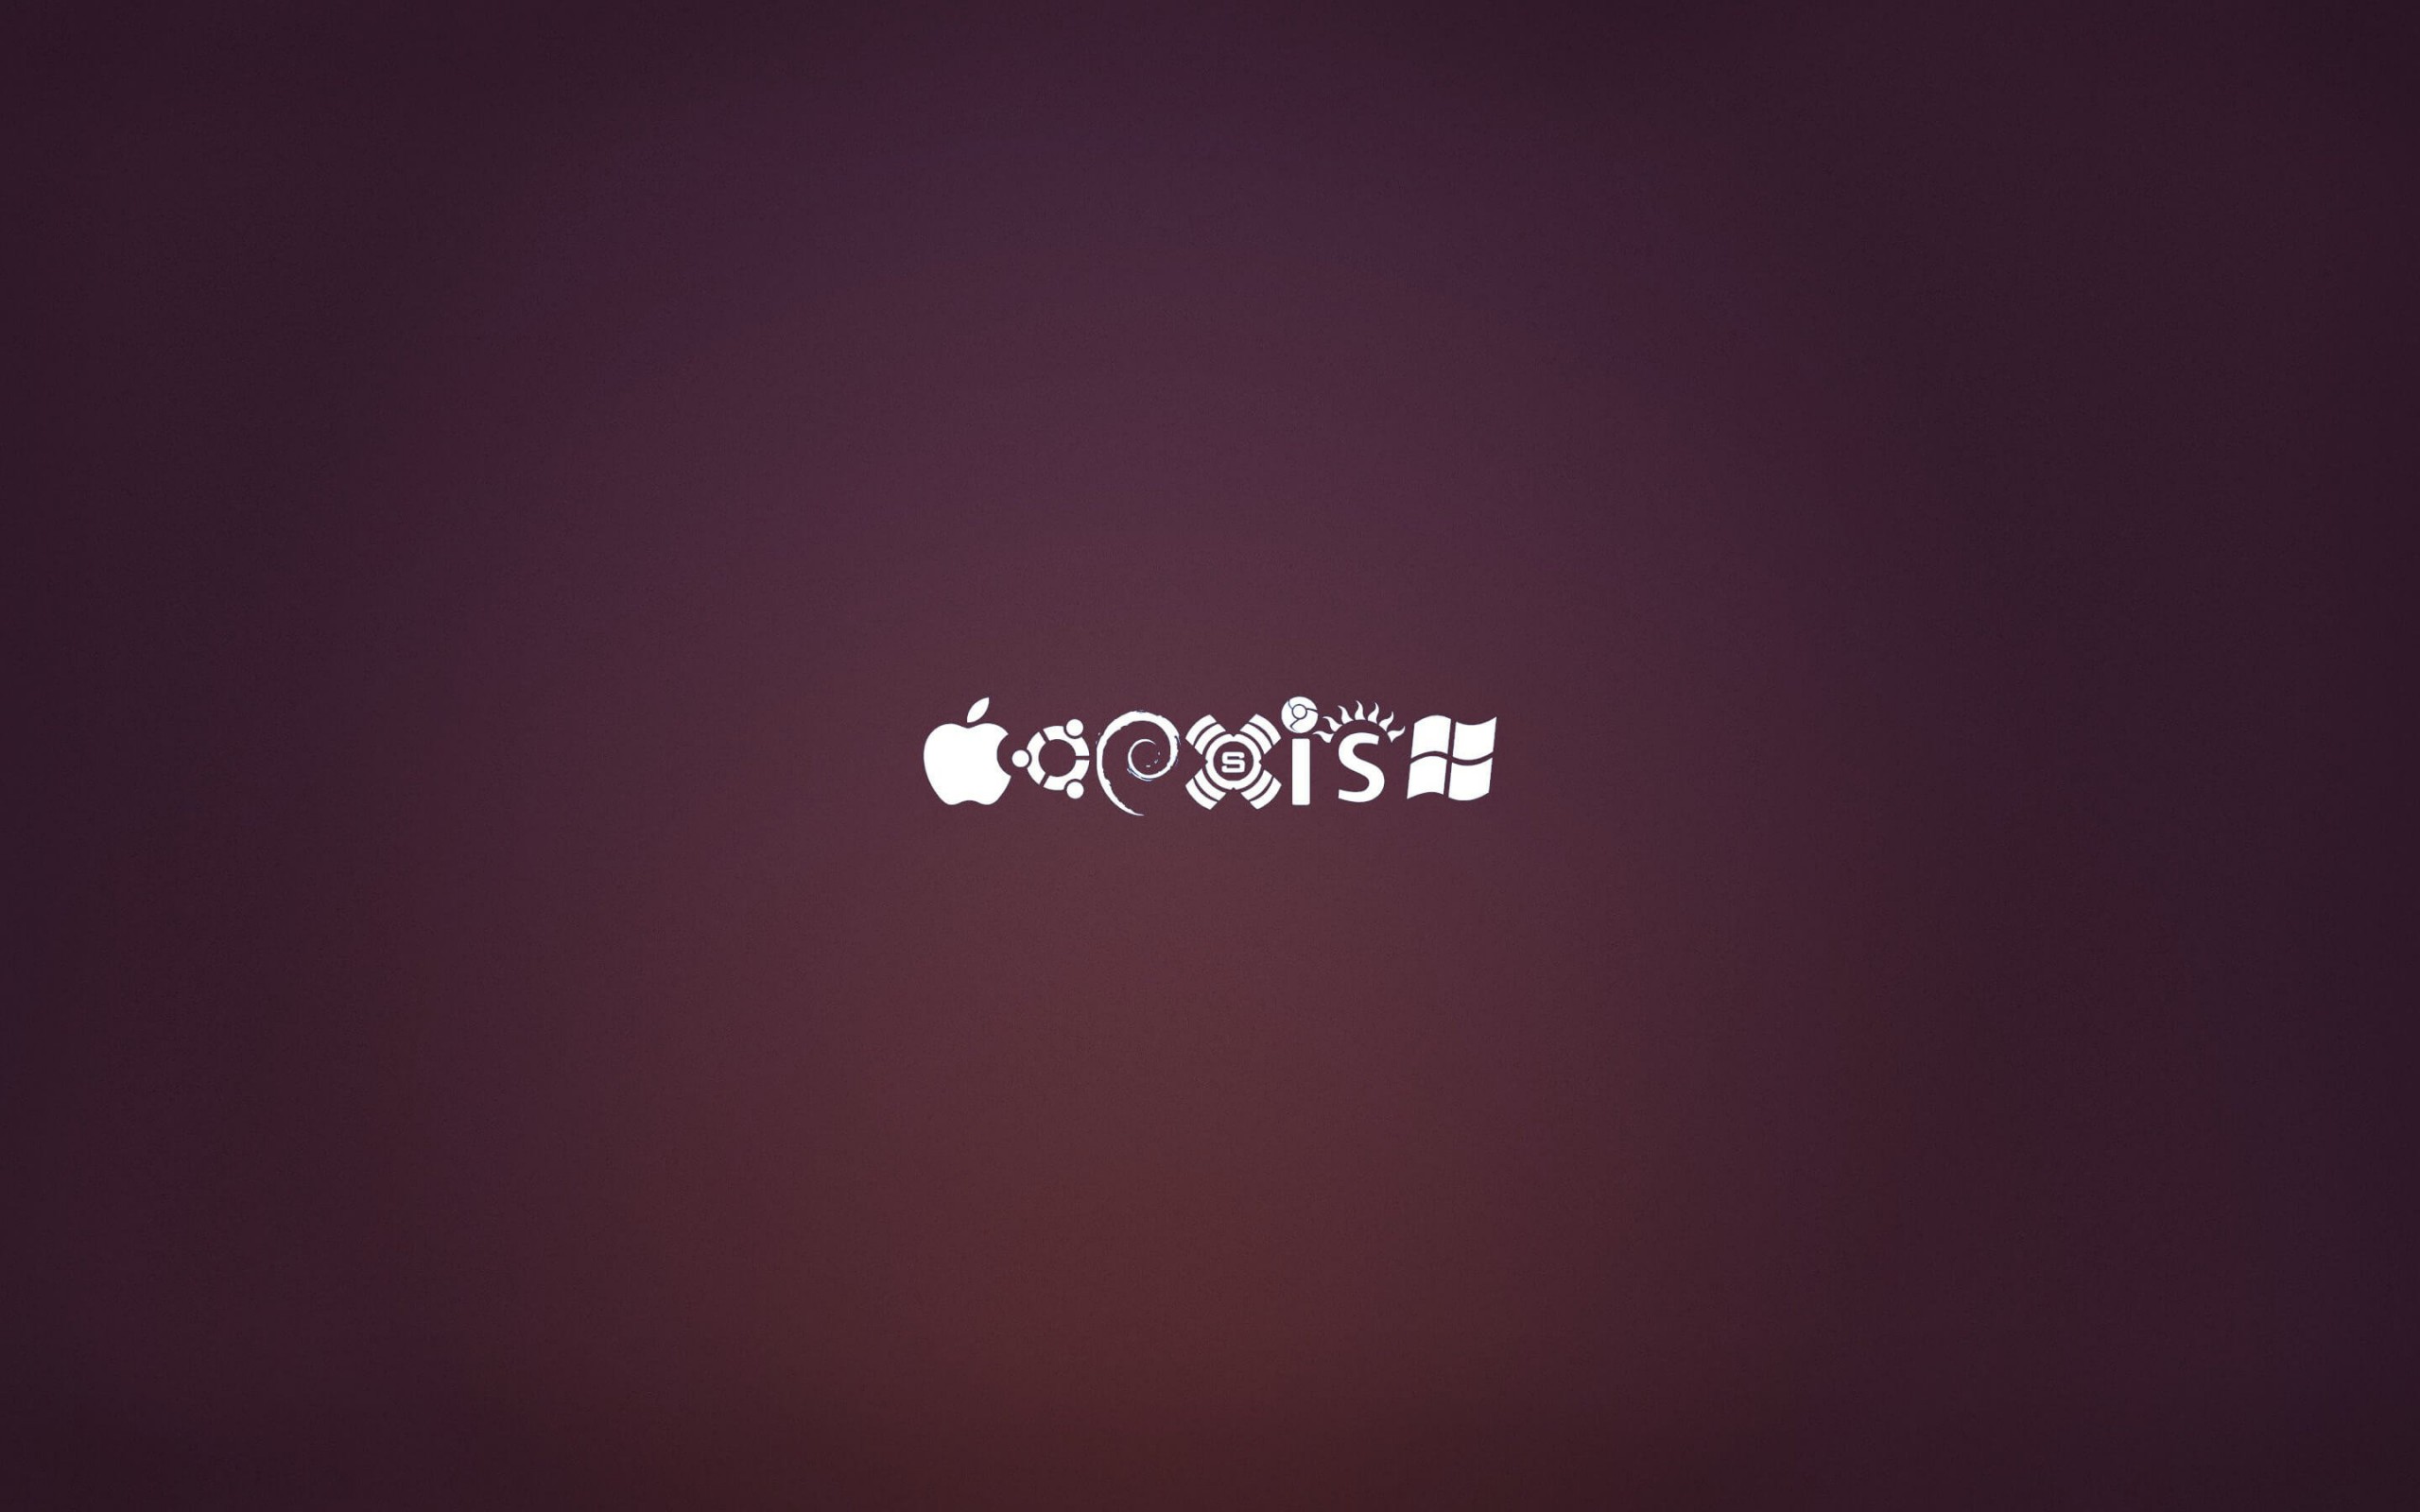 OS Coexist Wallpaper for Desktop 2560x1600